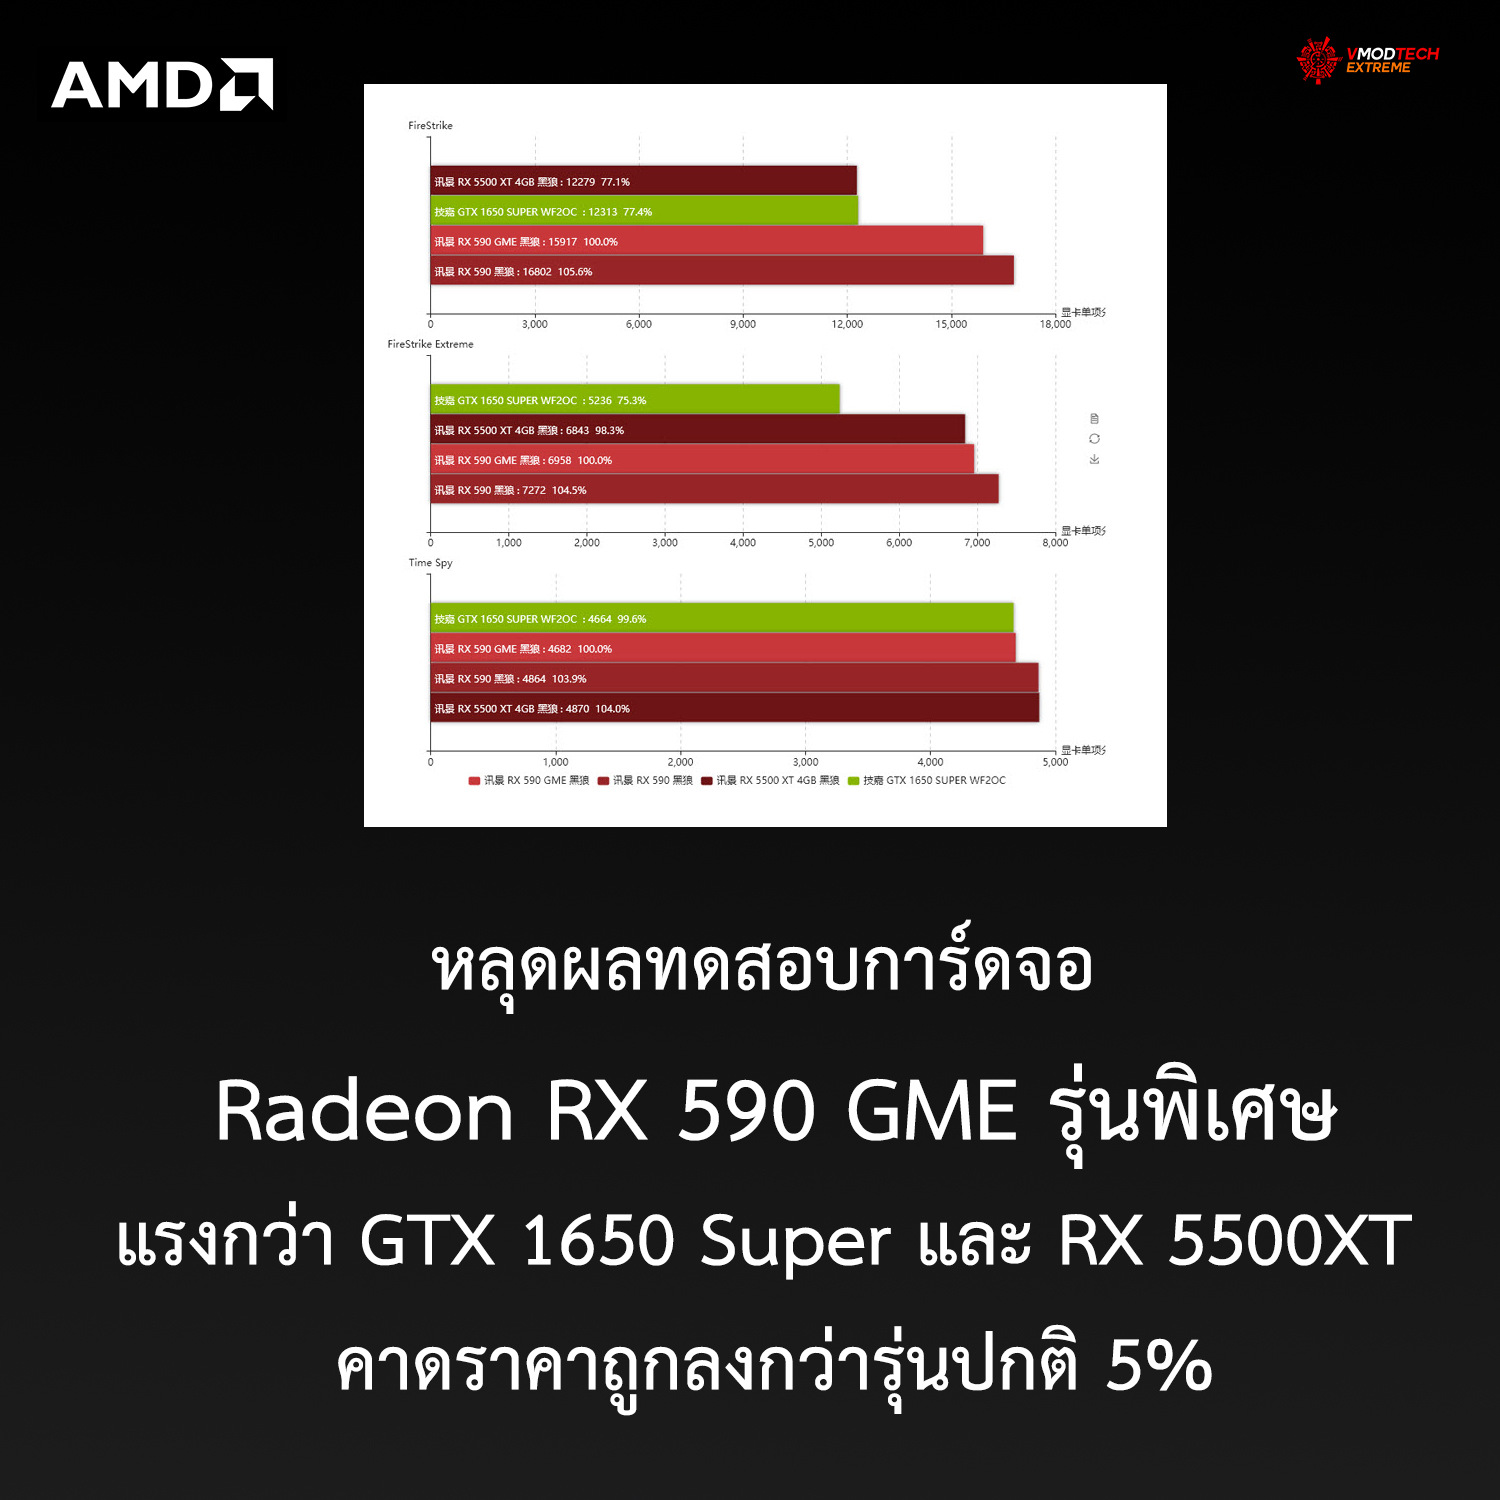 amd radeon rx 590 gme edition benchmark หลุดผลทดสอบการ์ดจอ Radeon RX 590 GME รุ่นพิเศษแรงกว่า GTX 1650 Super และ RX 5500XT คาดราคาถูกลง 5% 